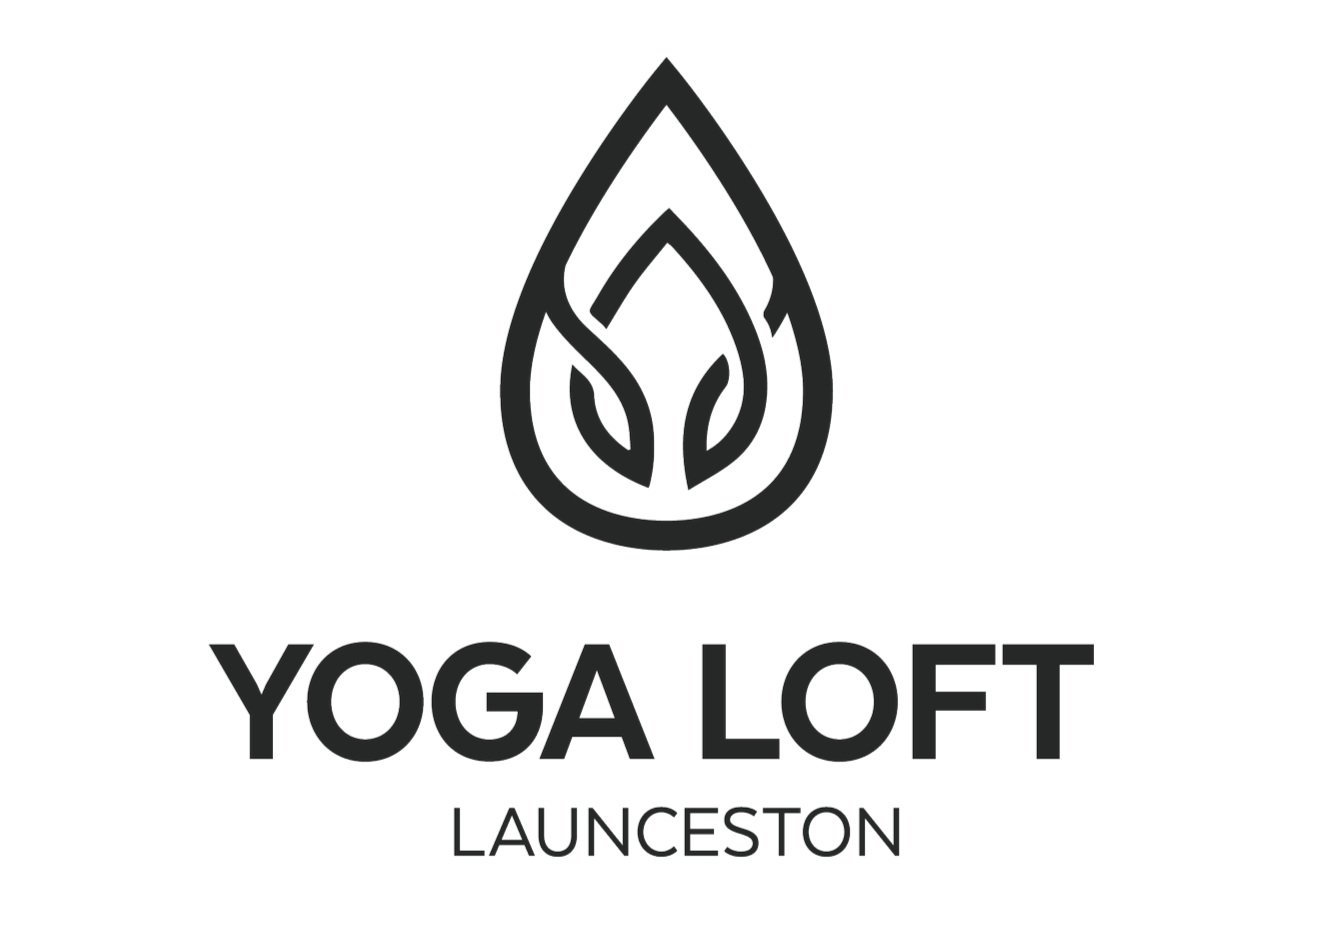 The Yoga Loft